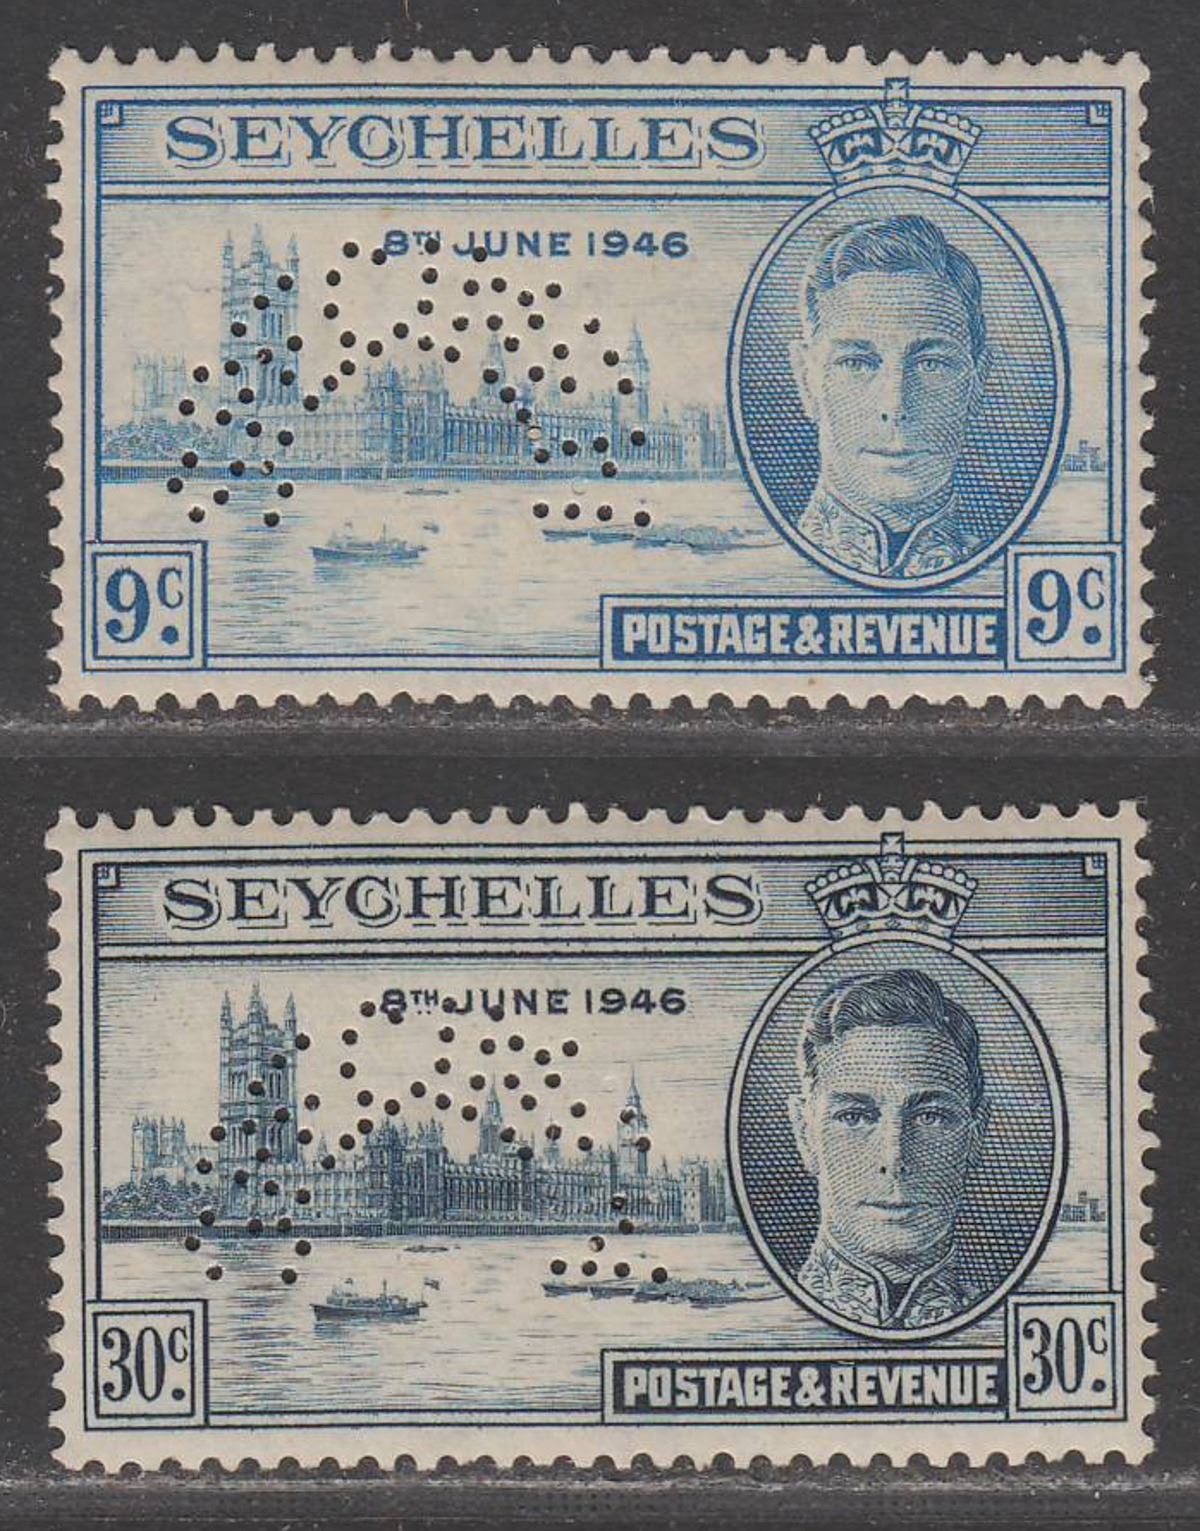 Seychelles 1946 KGVI Victory SPECIMEN Perf 9c, 30c Mint SG150s-151s c £95 toned